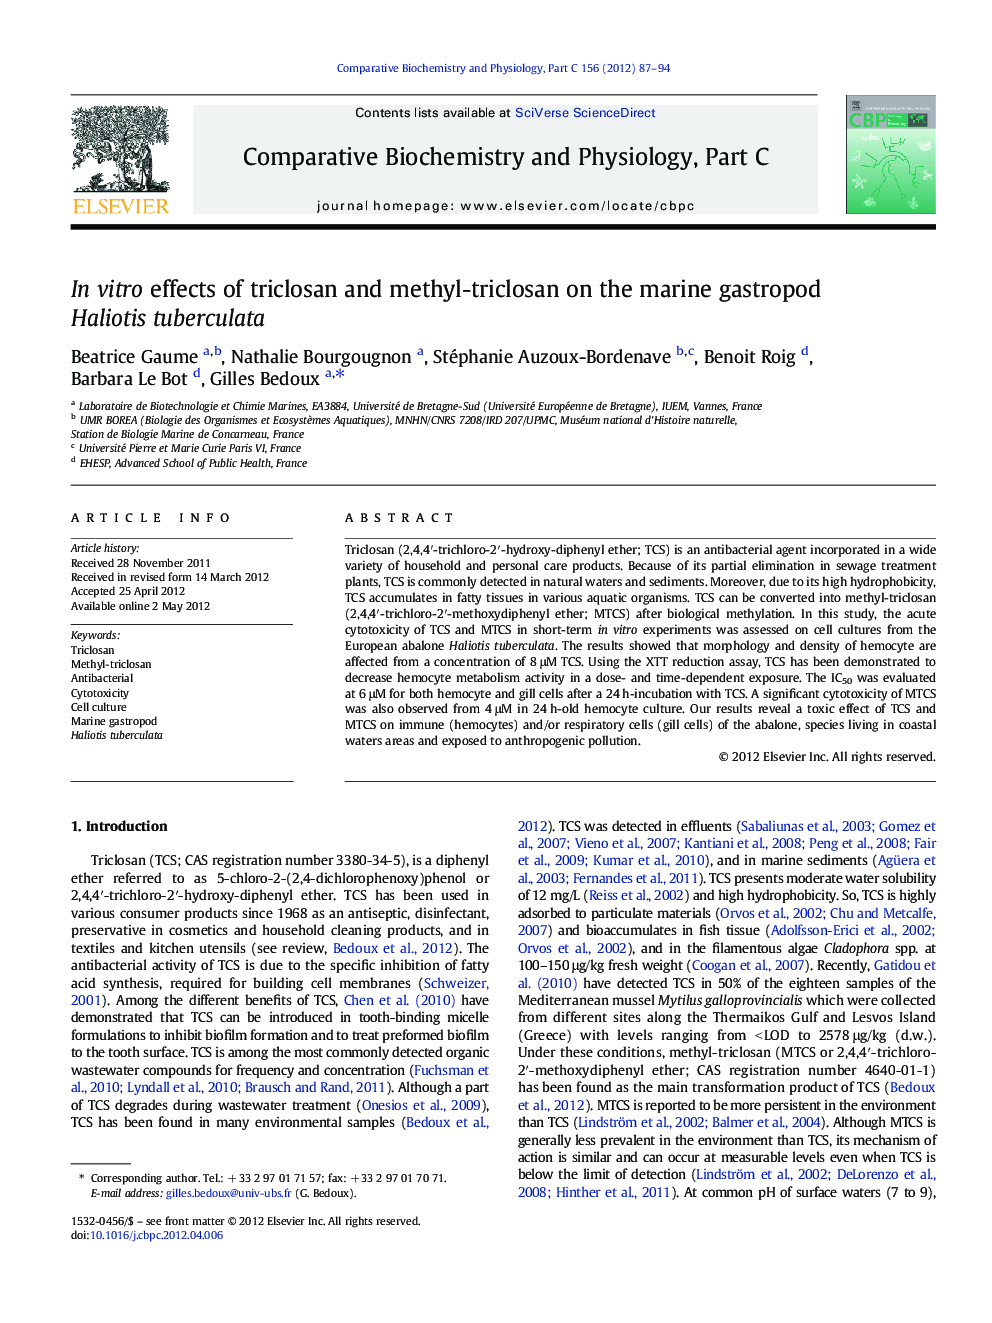 In vitro effects of triclosan and methyl-triclosan on the marine gastropod Haliotis tuberculata